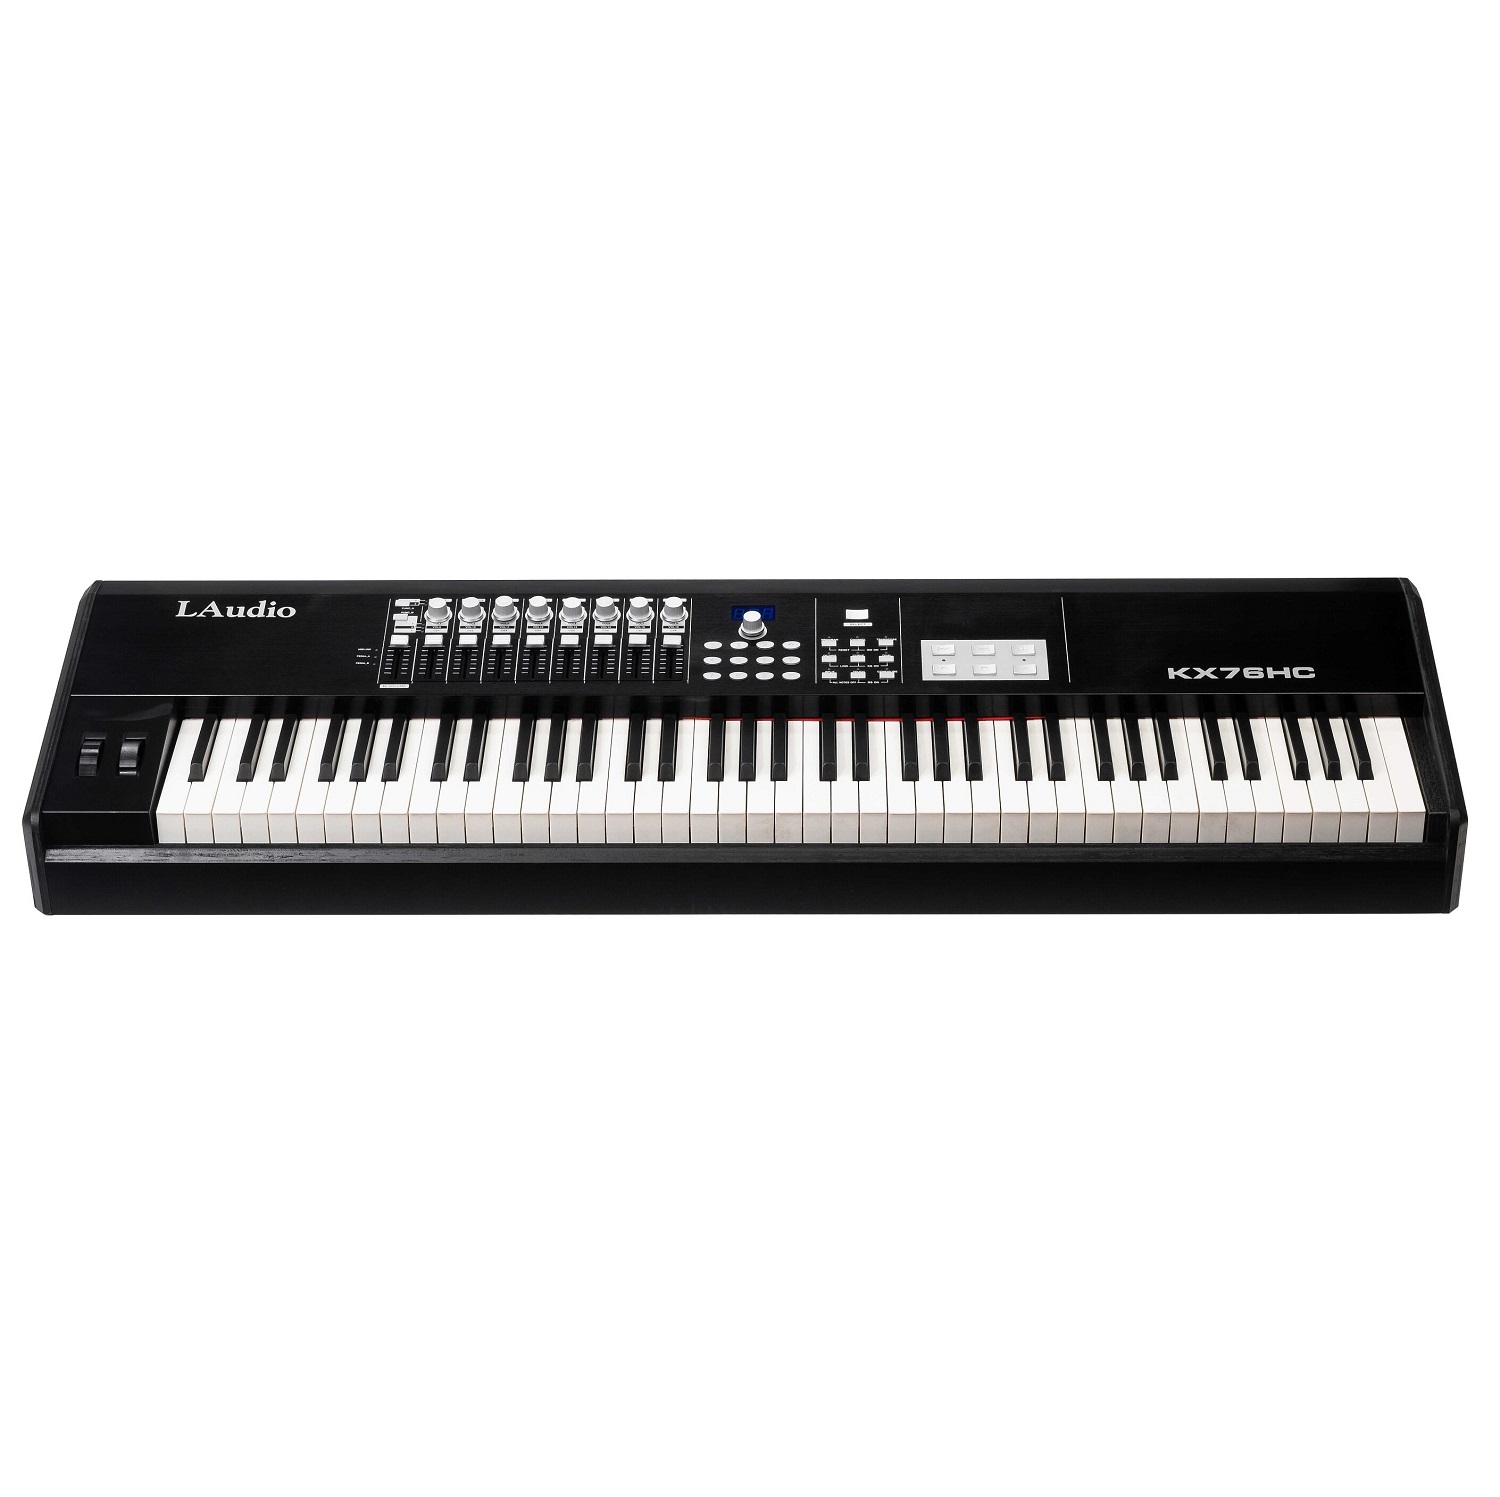 MIDI клавиатуры L Audio KX76HC midi клавиатуры kurzweil km88